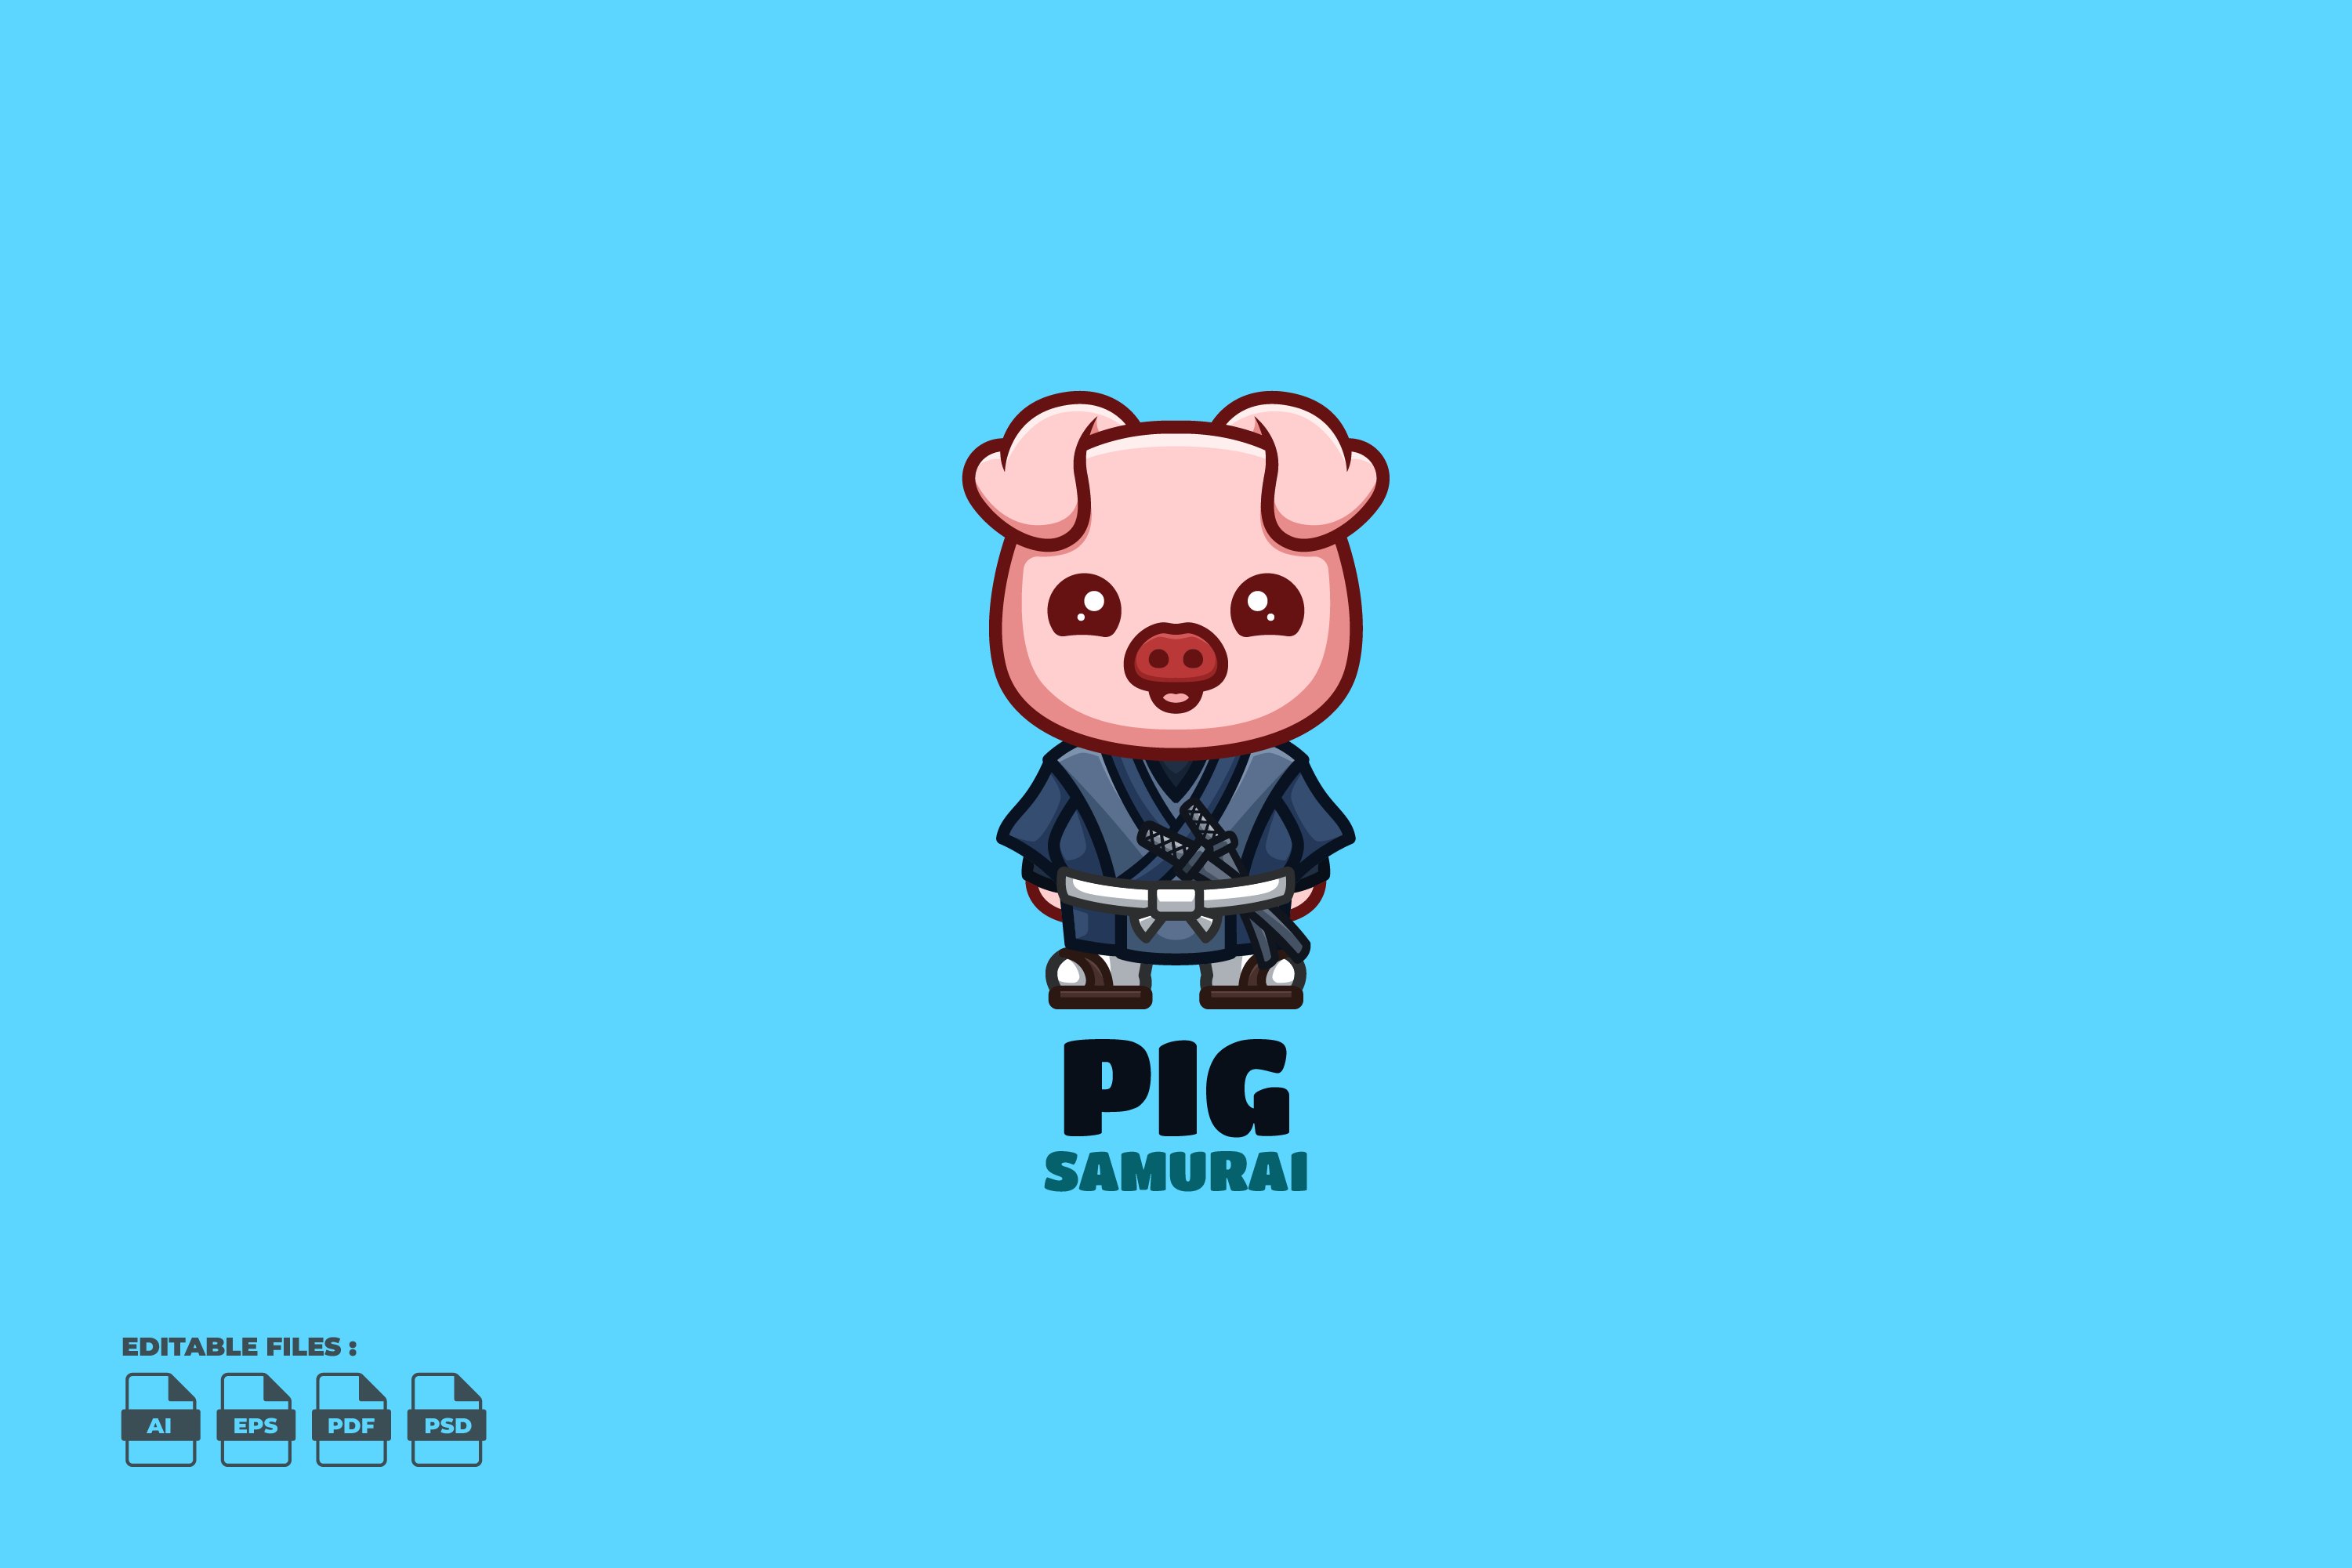 Samurai Pig Cute Mascot Logo cover image.